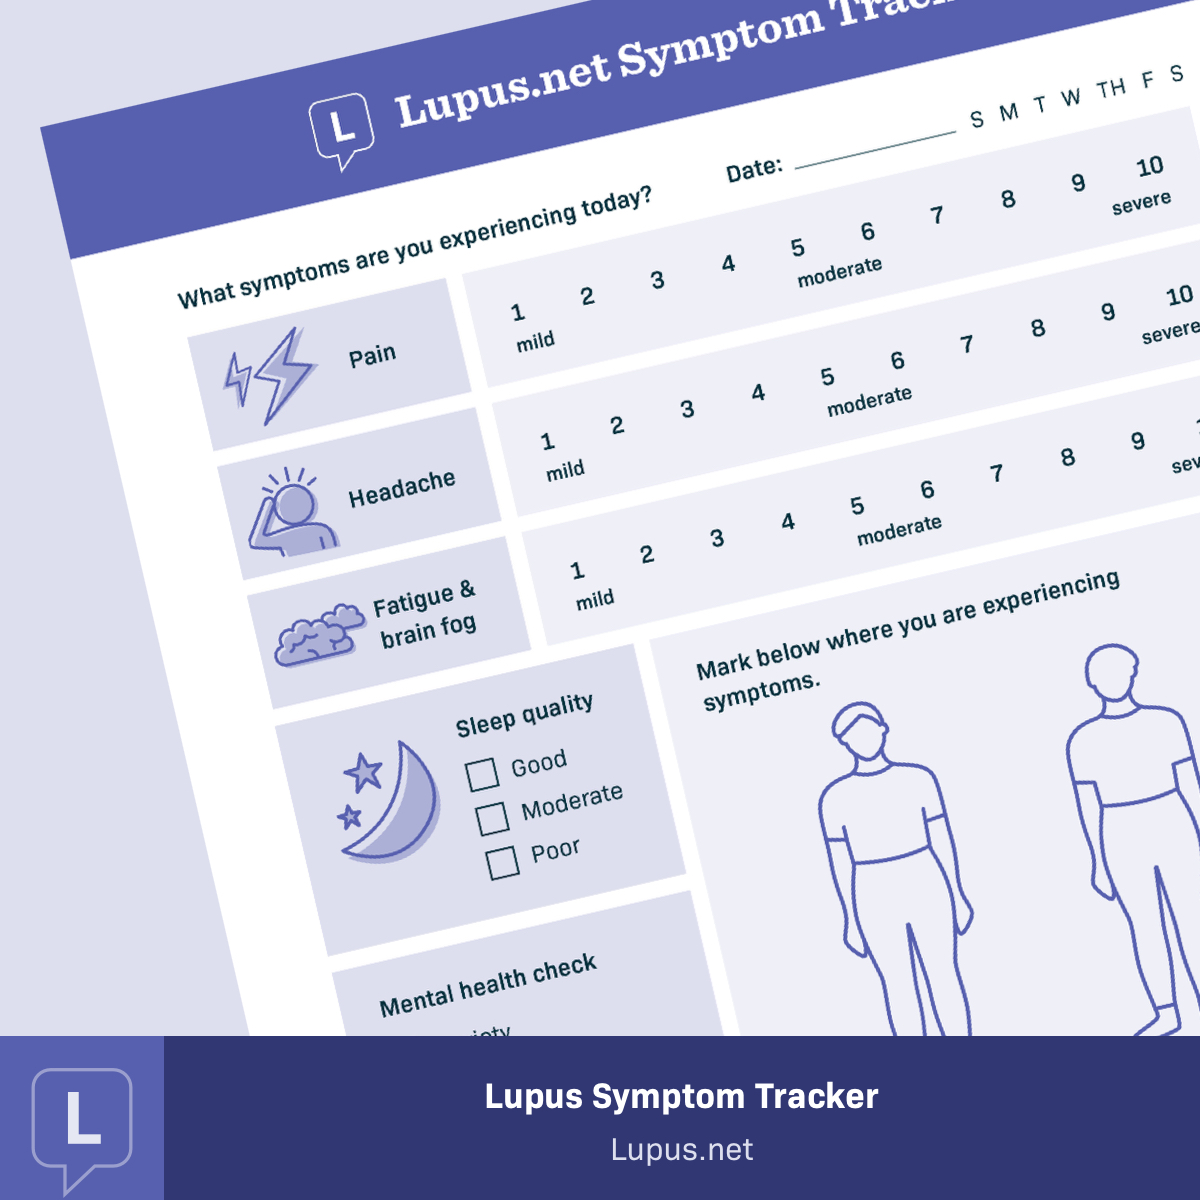 Lupus.net Symptom Tracker